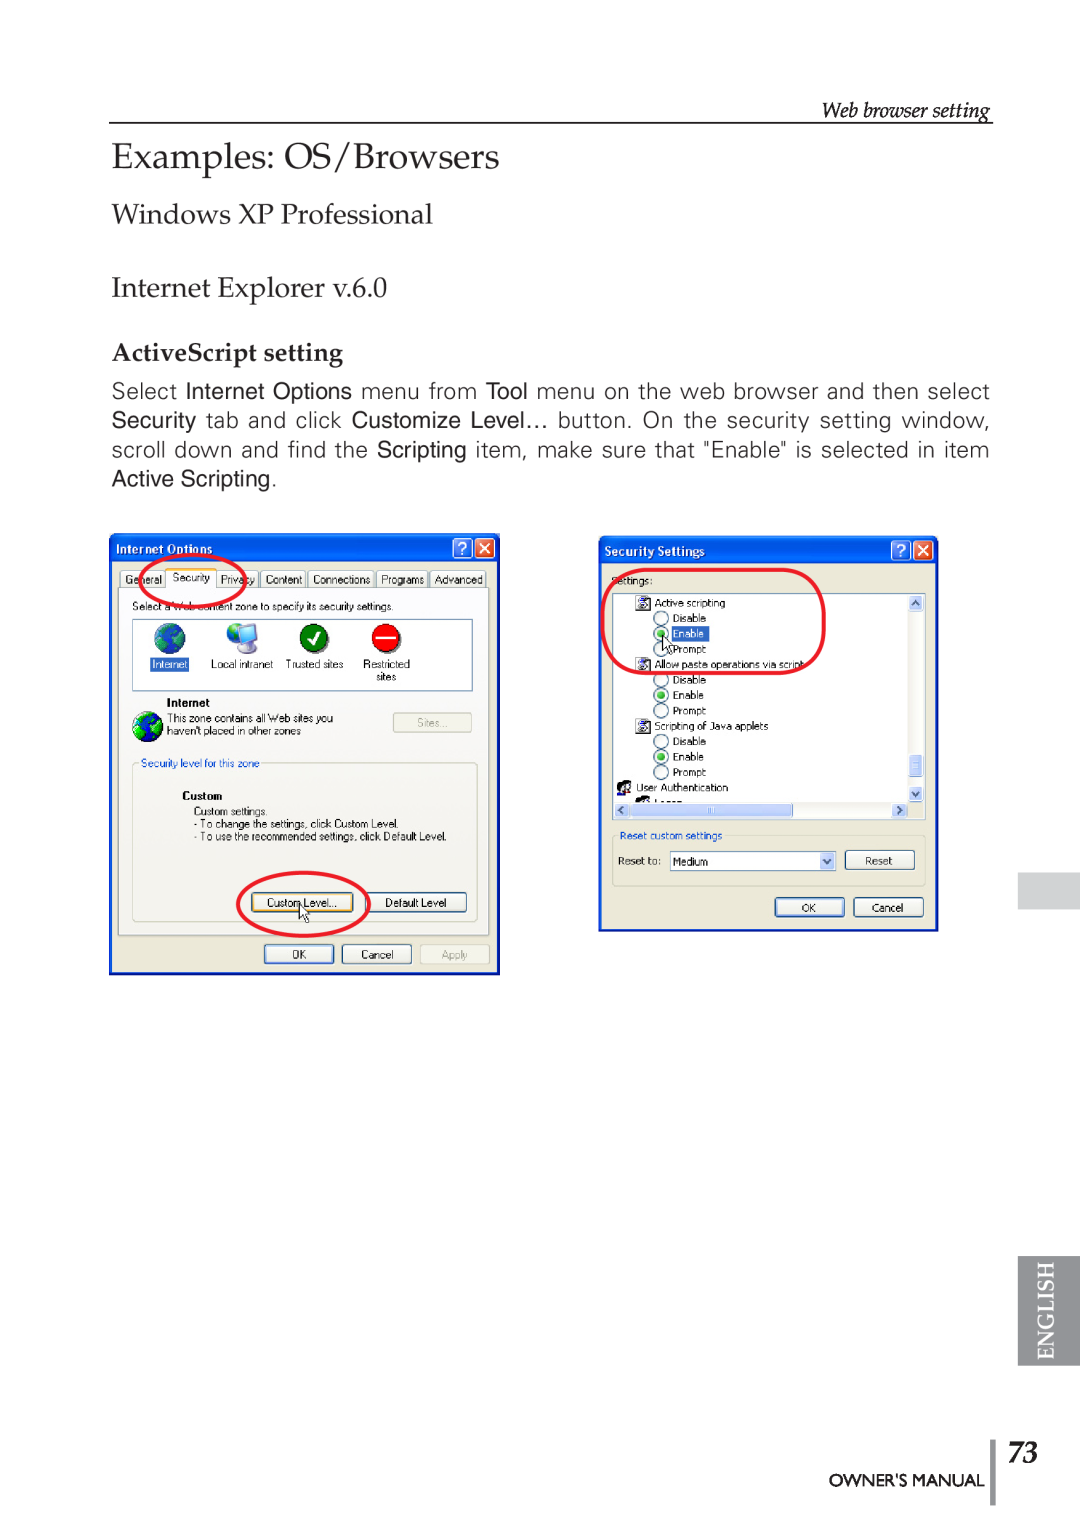 Eiki PJNET-300 Examples OS/Browsers, Windows XP Professional Internet Explorer, ActiveScript setting, Web browser setting 